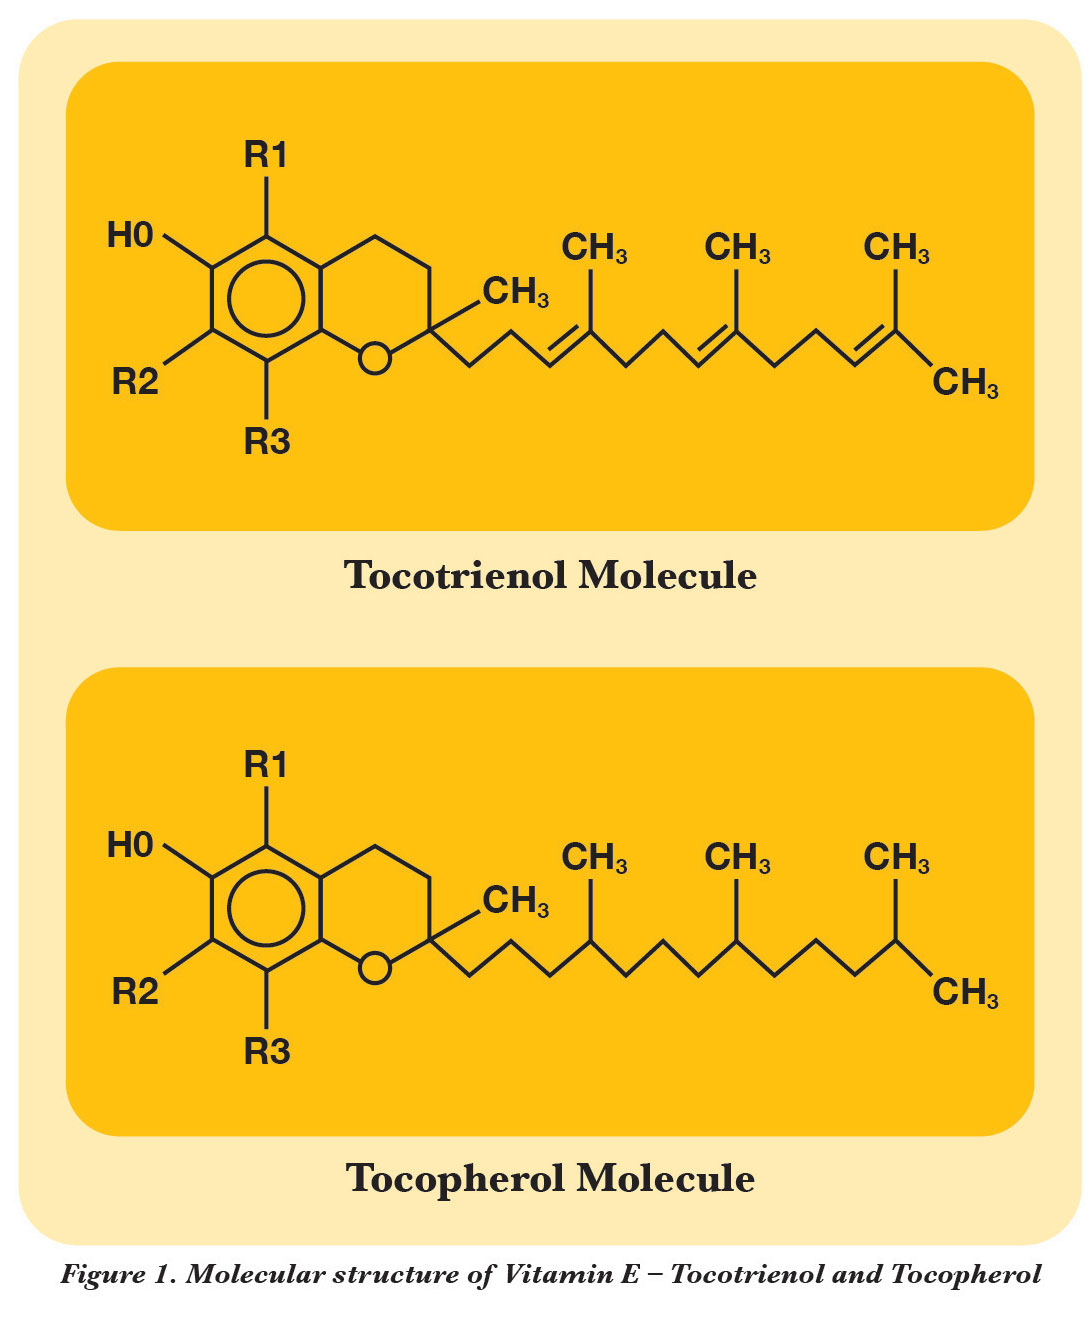 Tocotrienol มีพันธะคู่มากกว่า อยู่ในสภาวะไม่อิ่มตัว